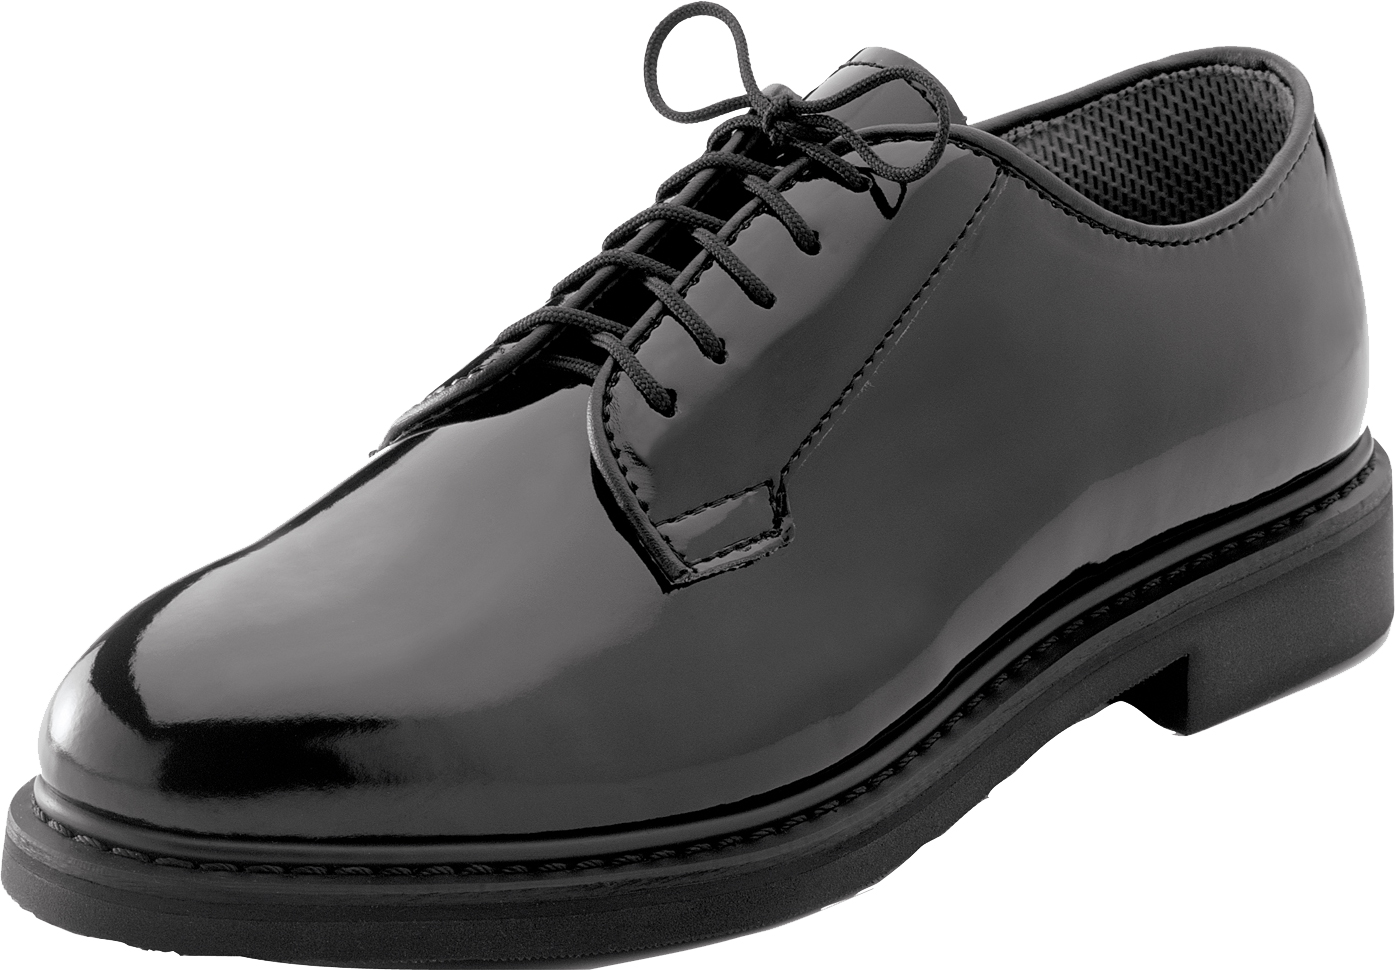 Rothco Black Uniform Hi-Gloss Oxford Dress Shoes